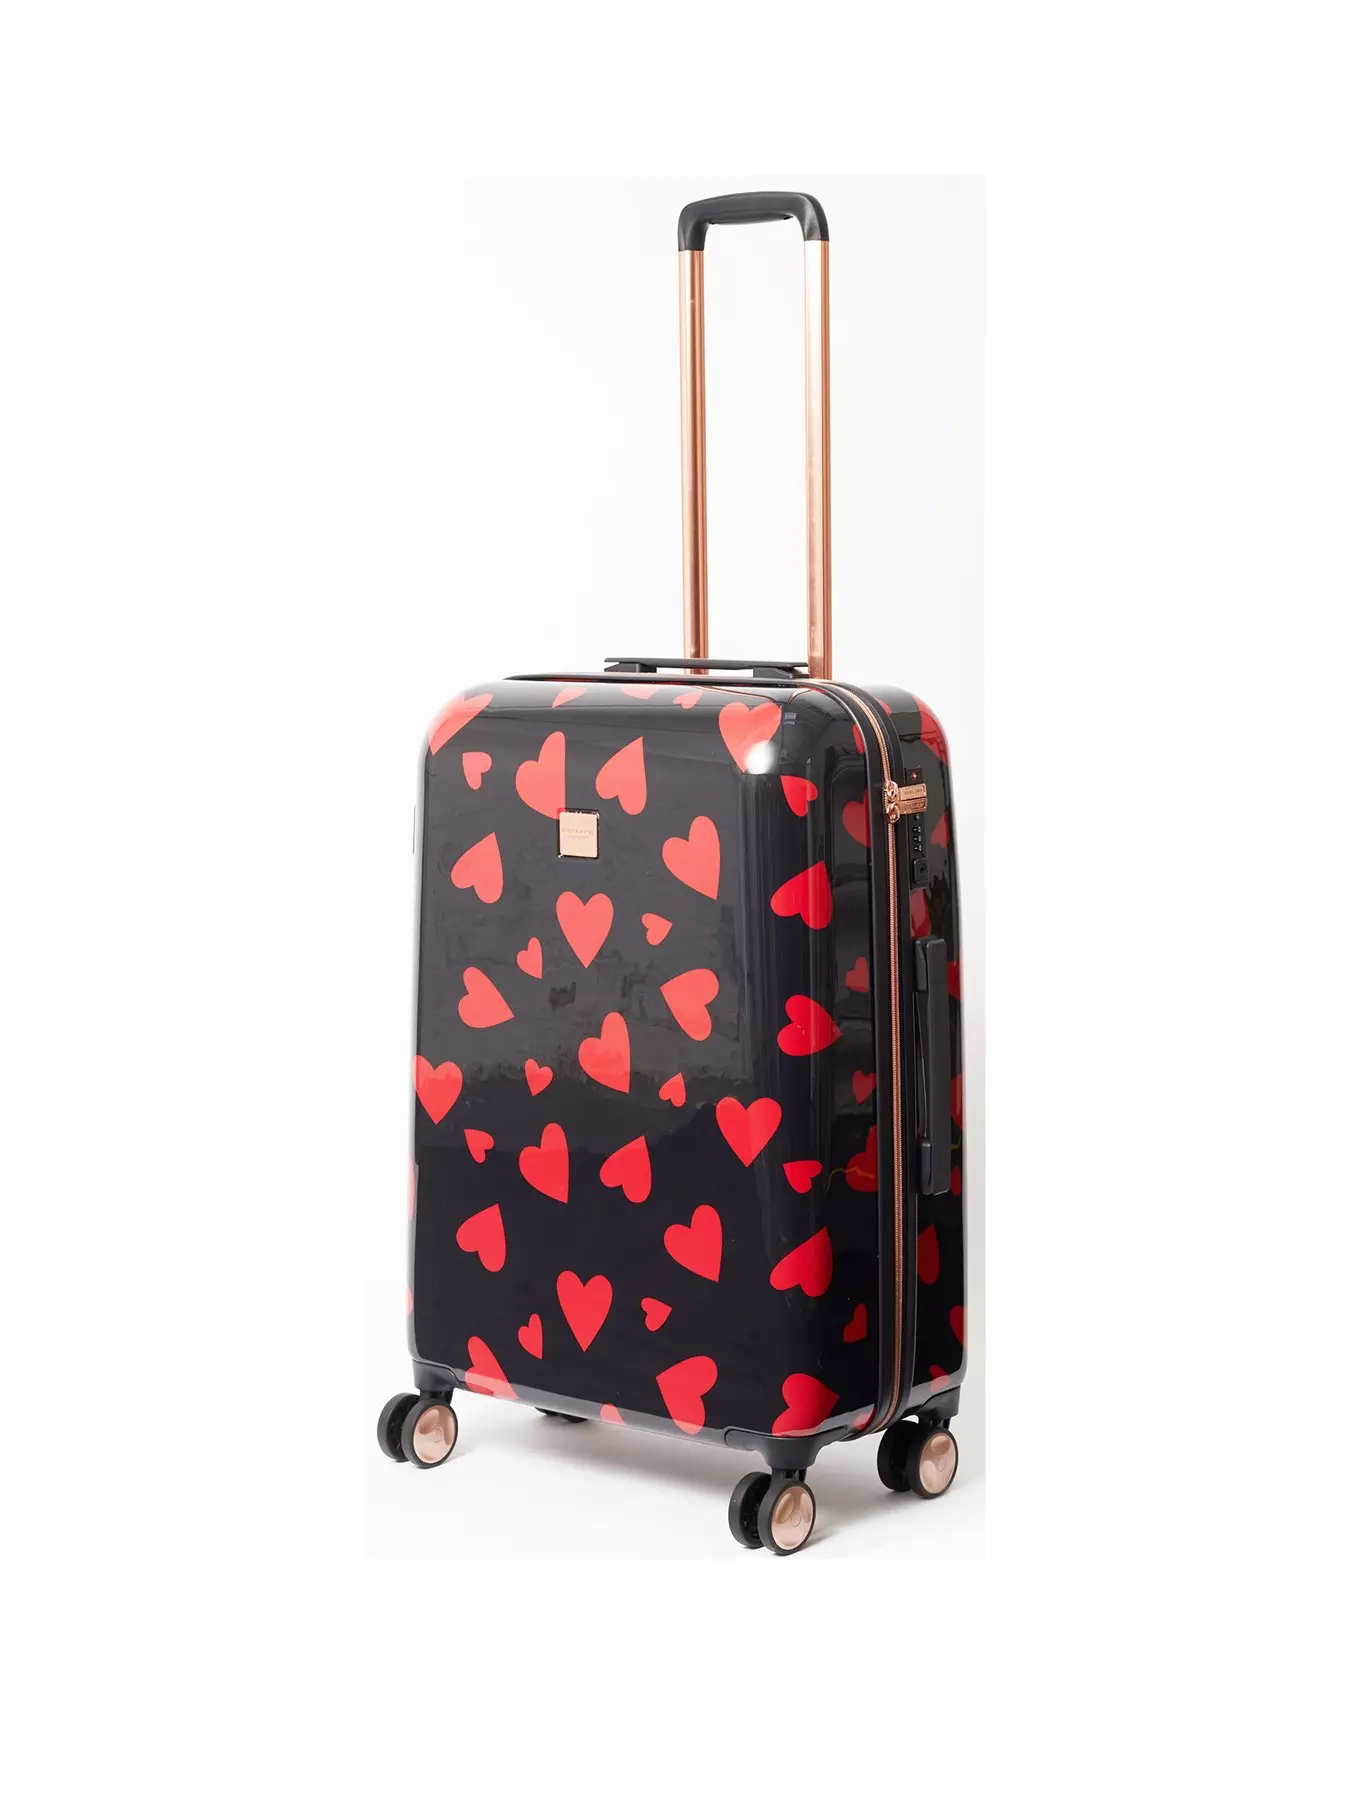 Suitcases UK, Luggage & Suitcases